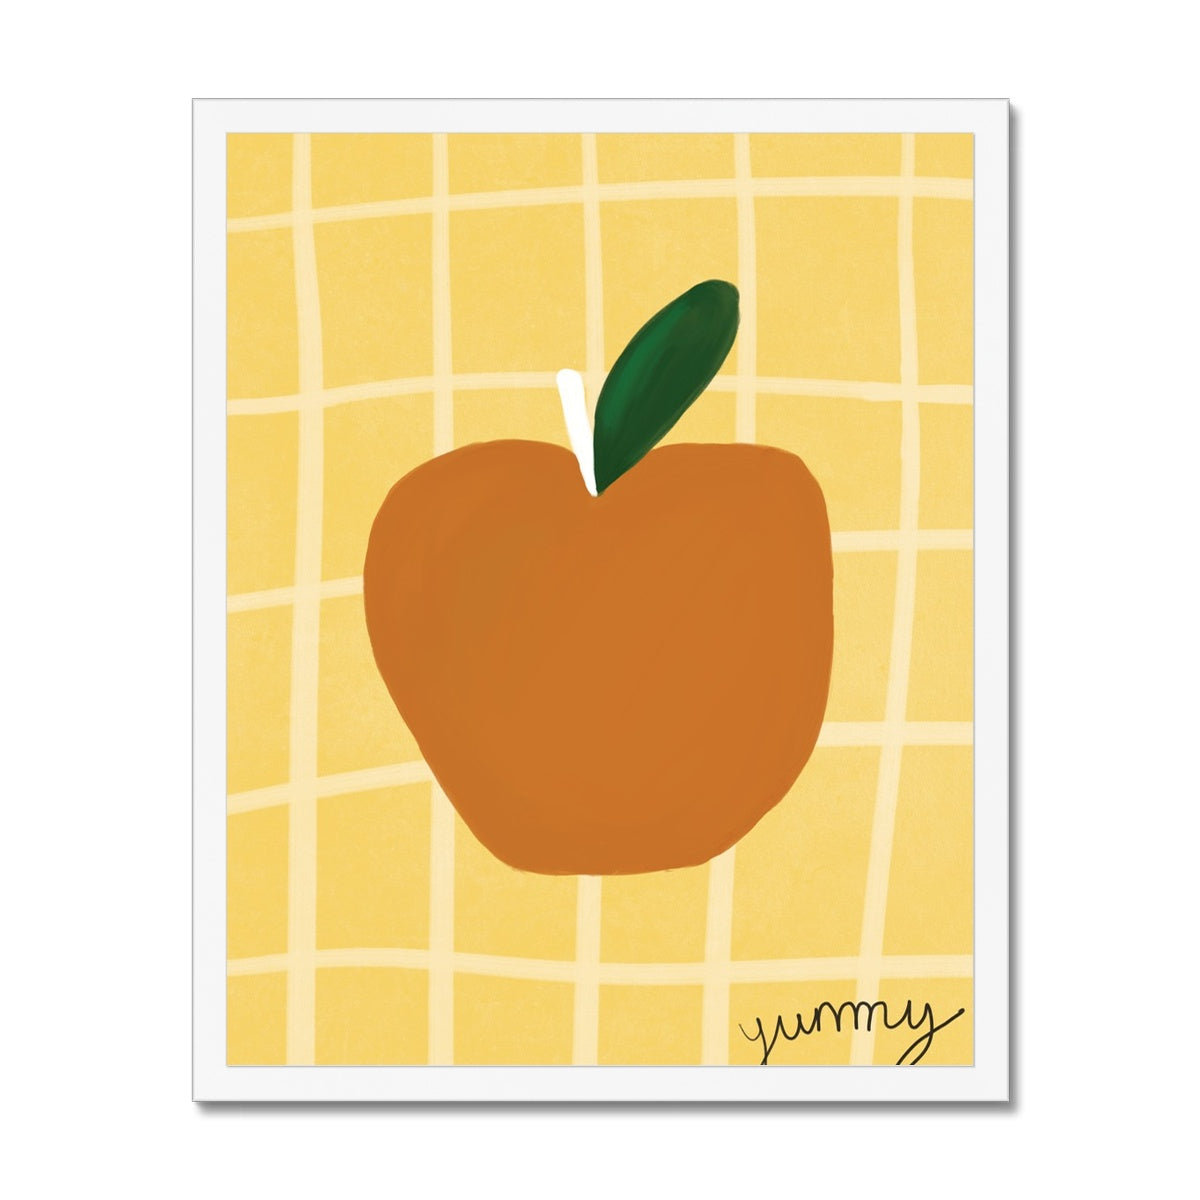 Yummy Apple Print - Yellow, Brown Framed Print